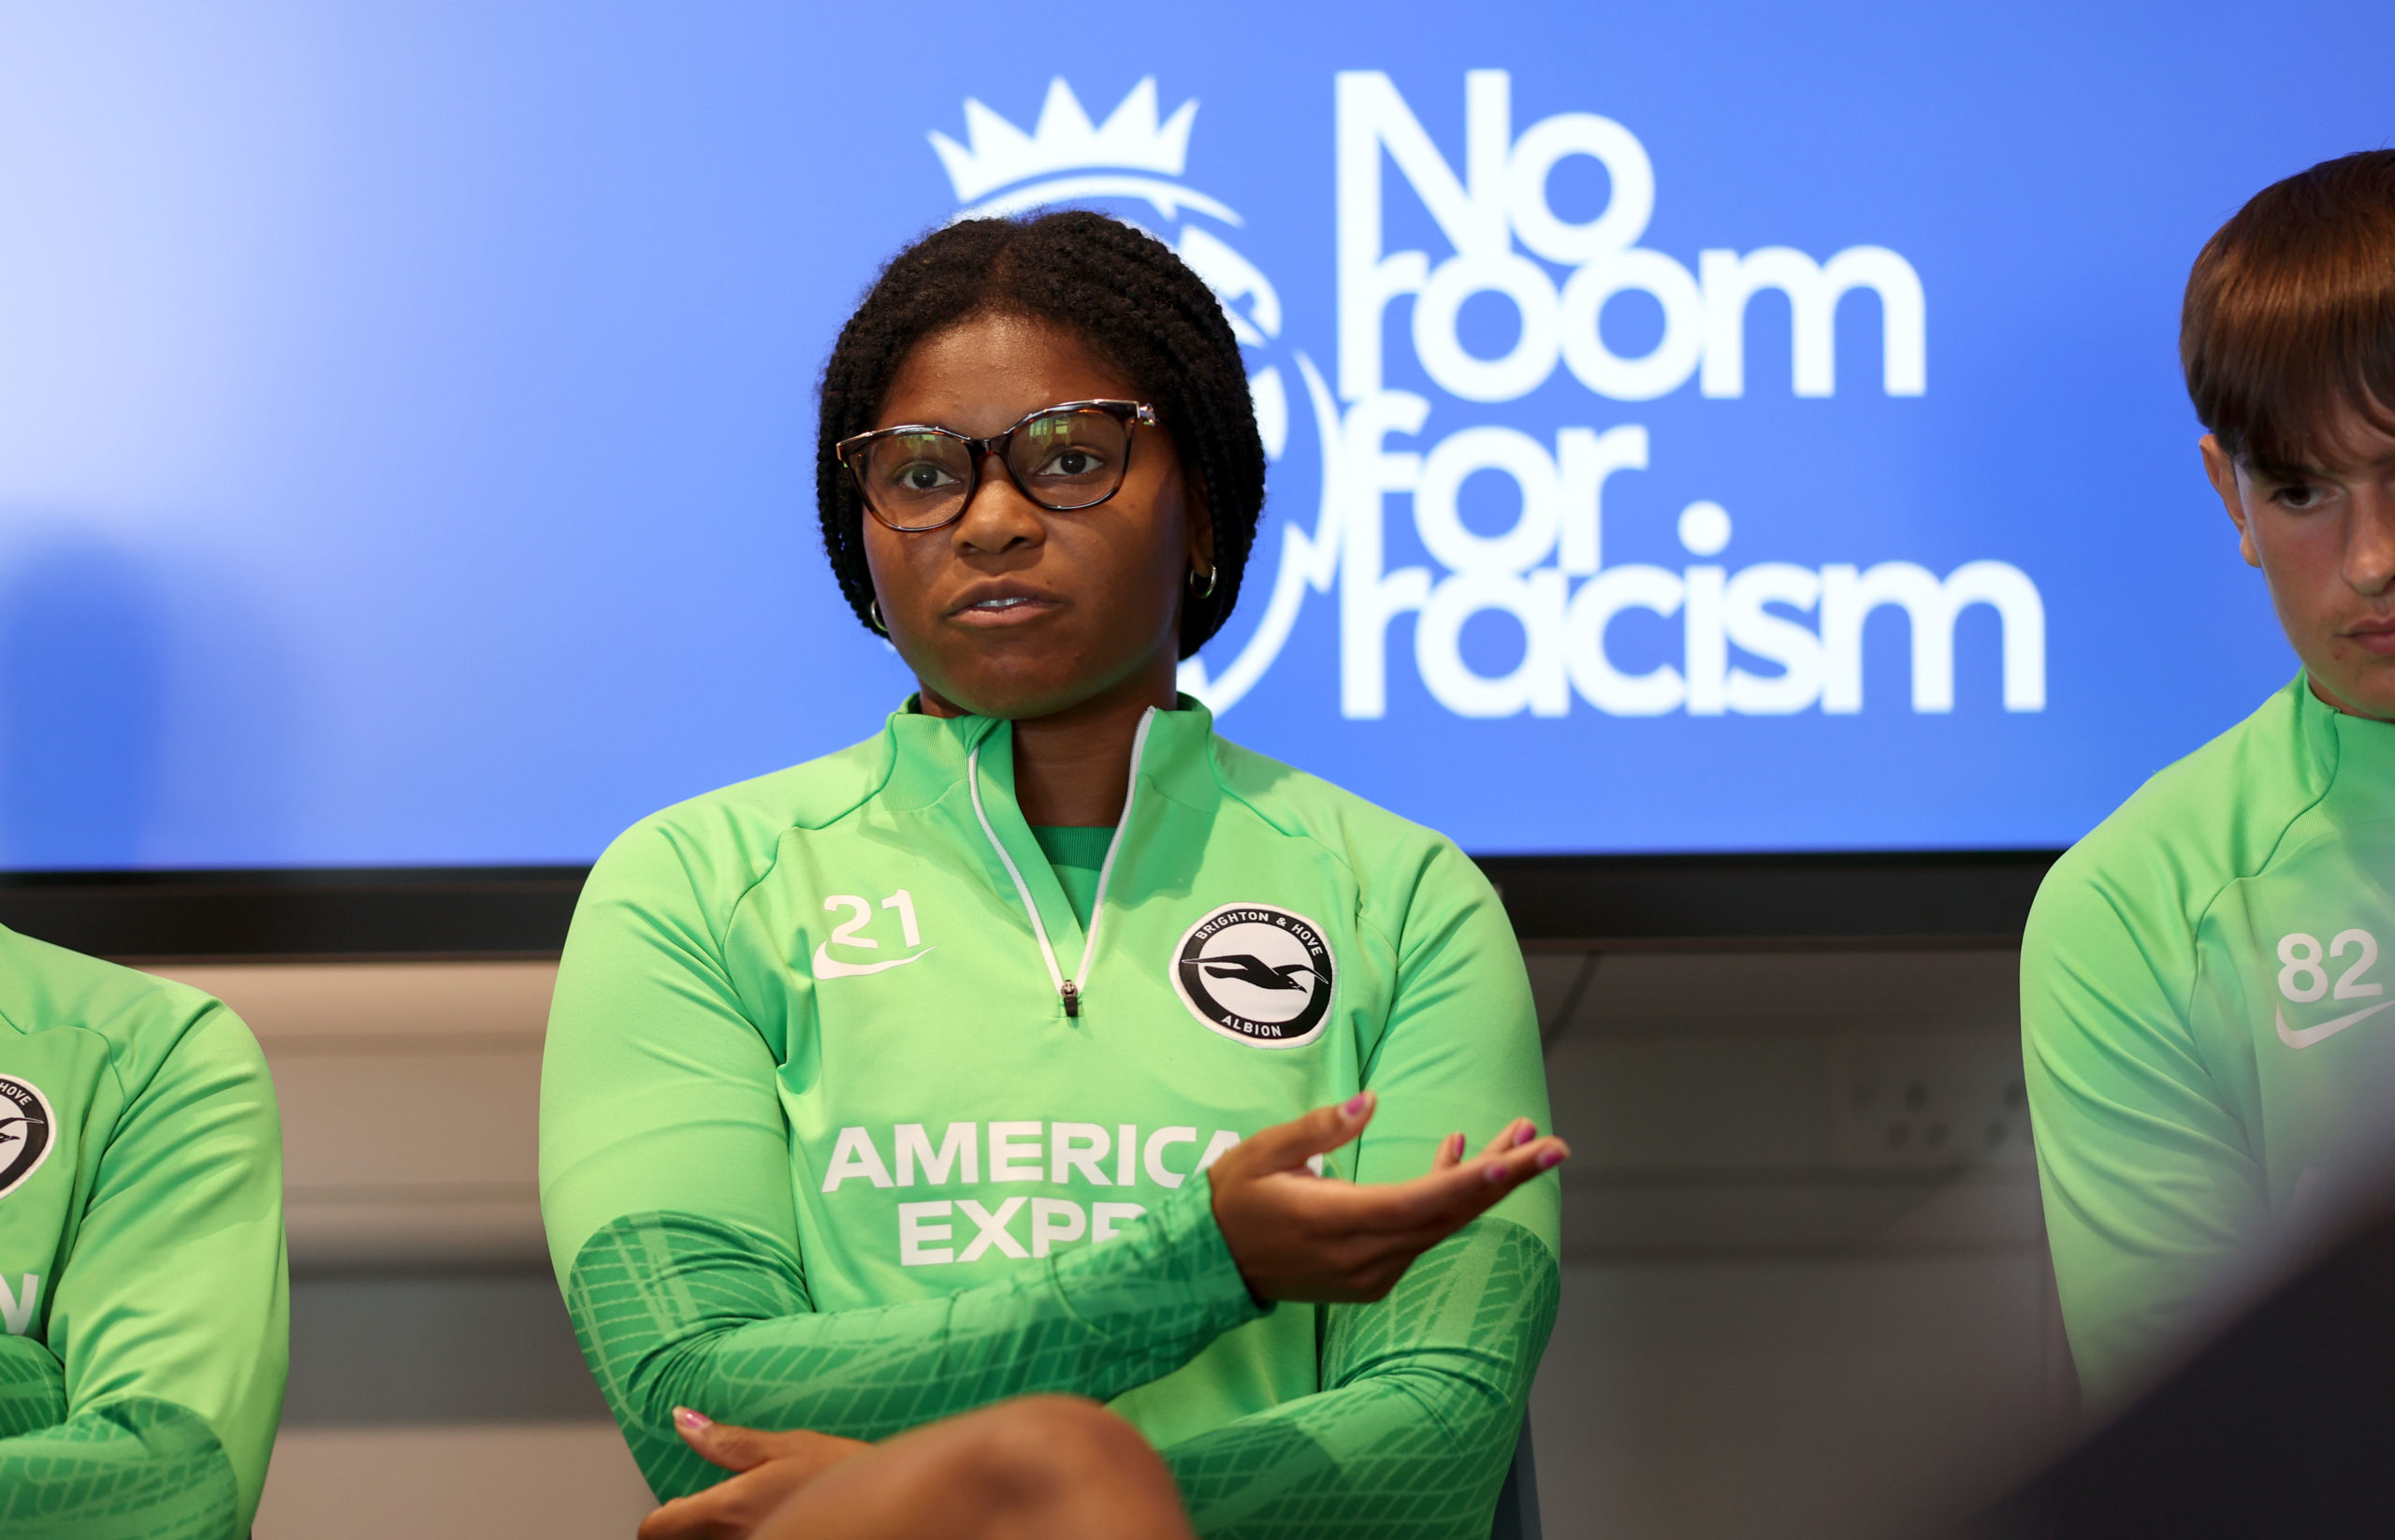 Madison Haley talks anti-racism with Brighton students